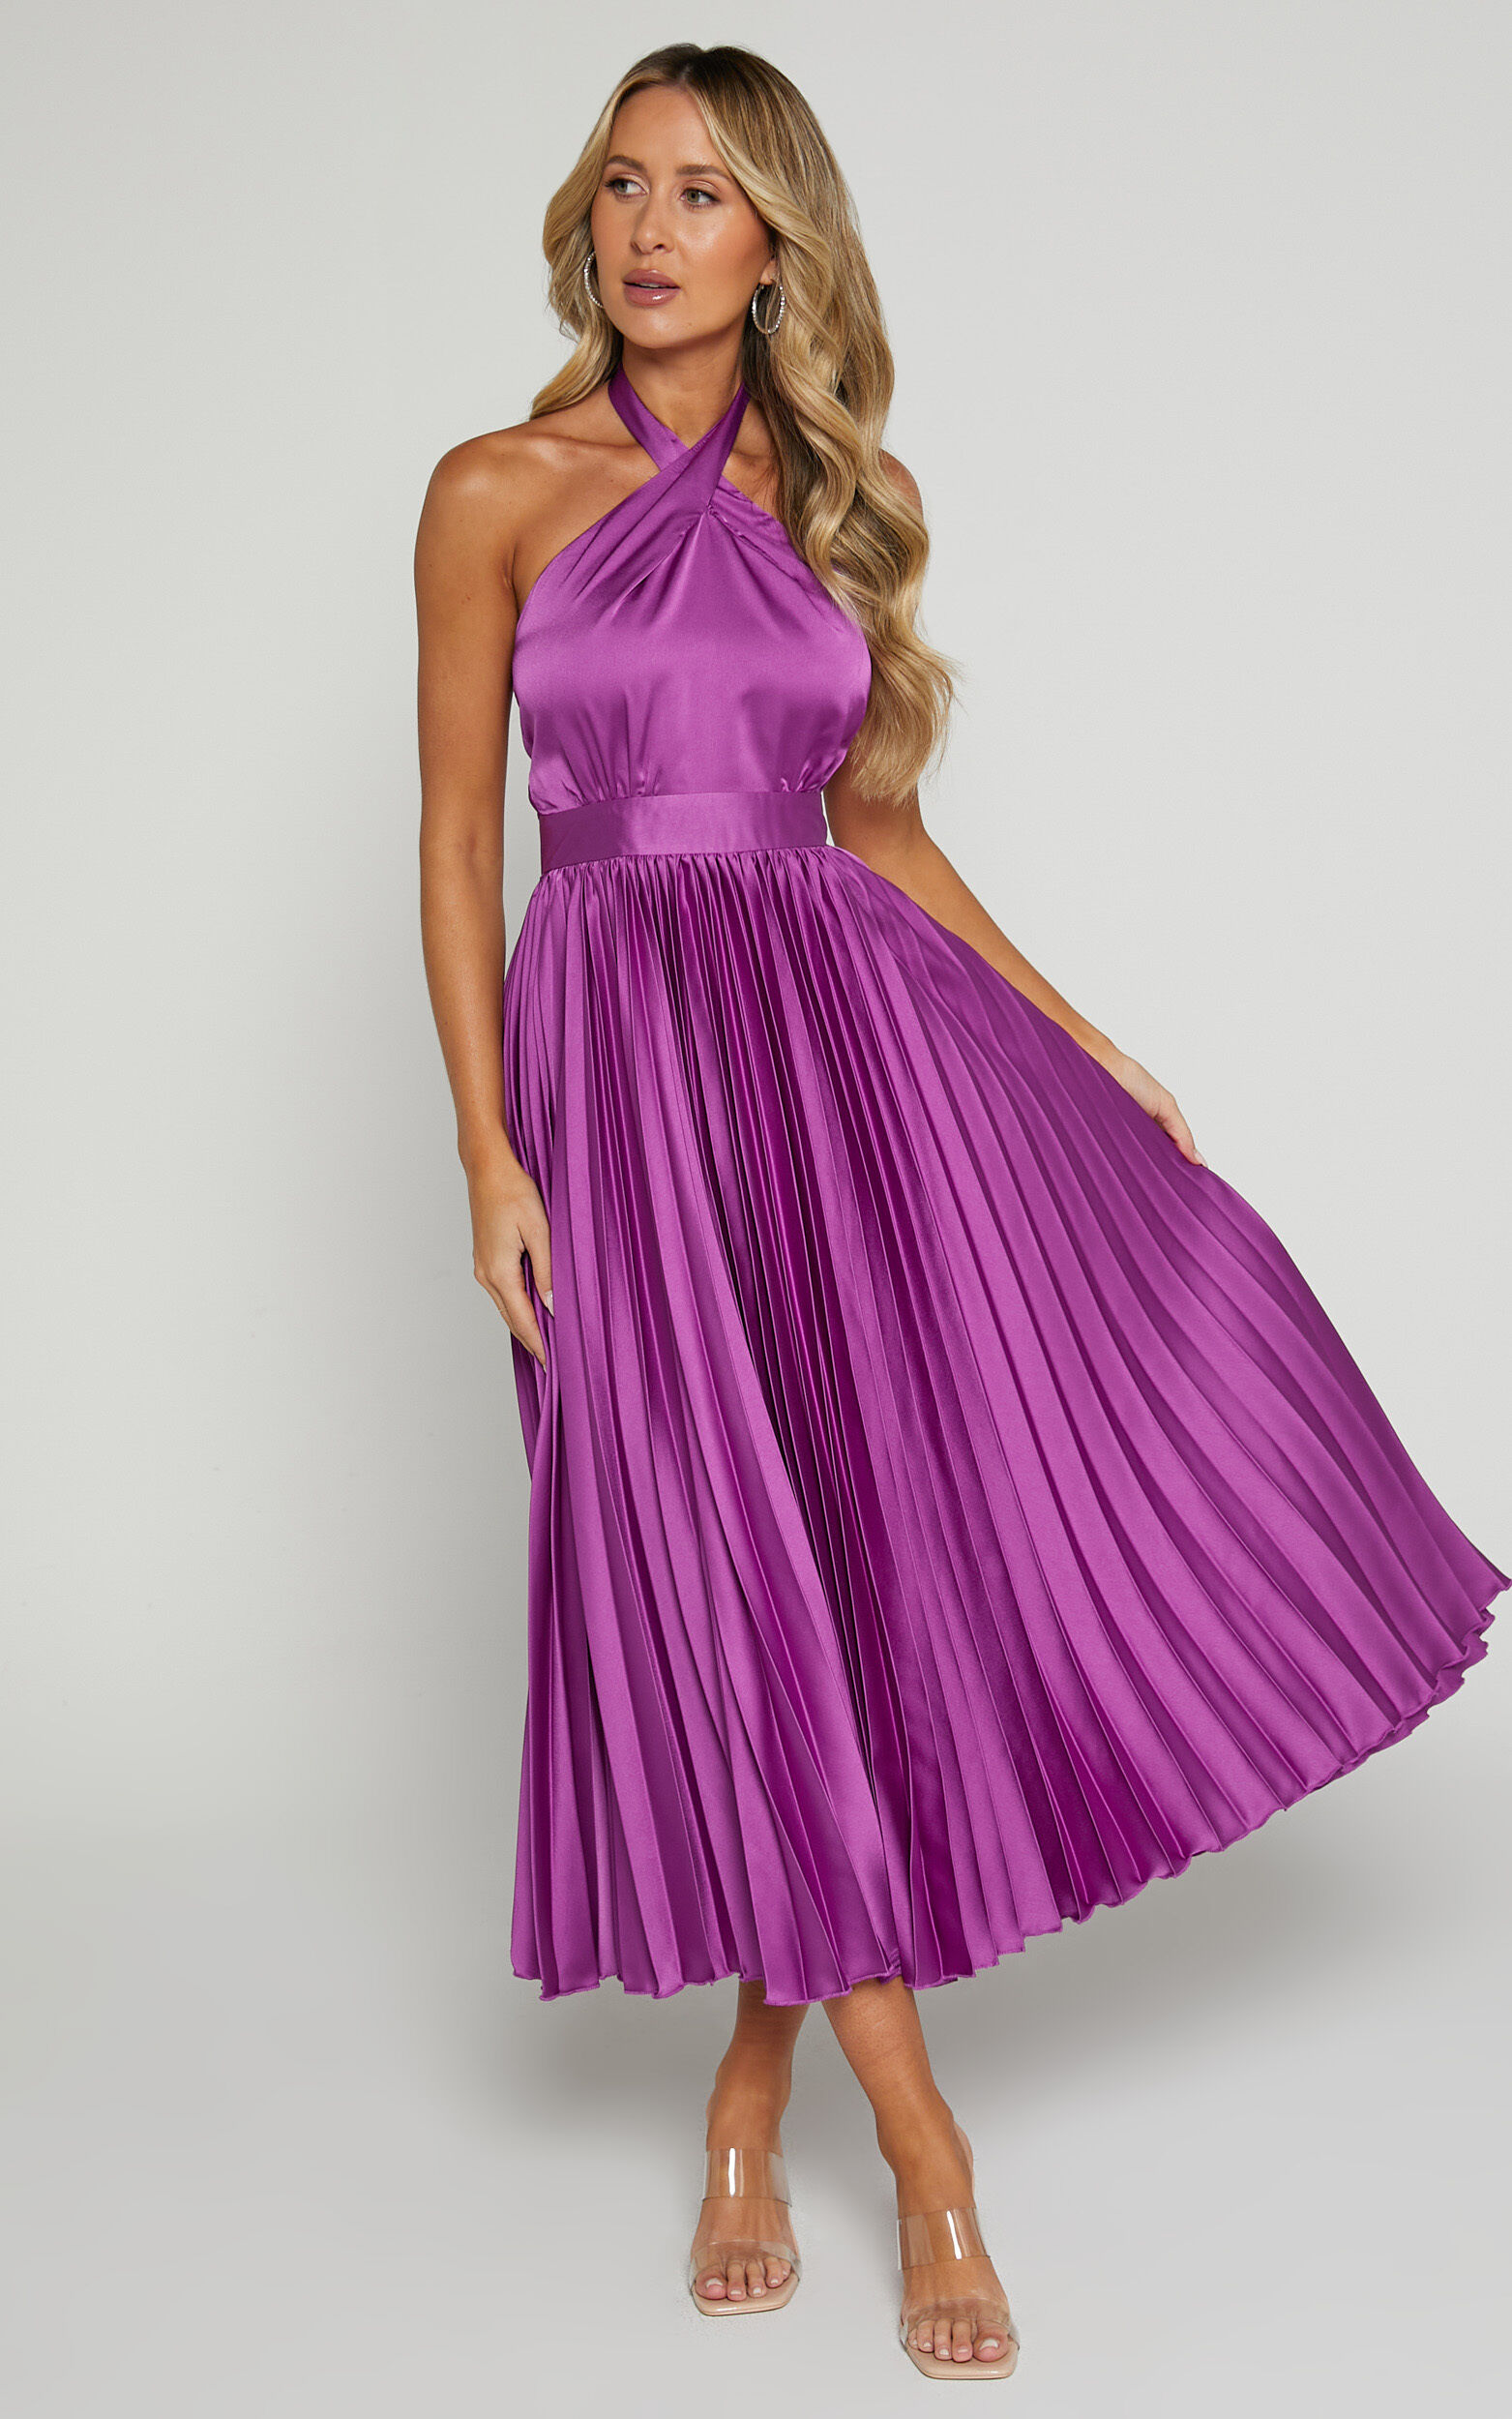 Eloise Midaxi Dress - Halter Neck Pleated Dress in Grape - 06, PRP1